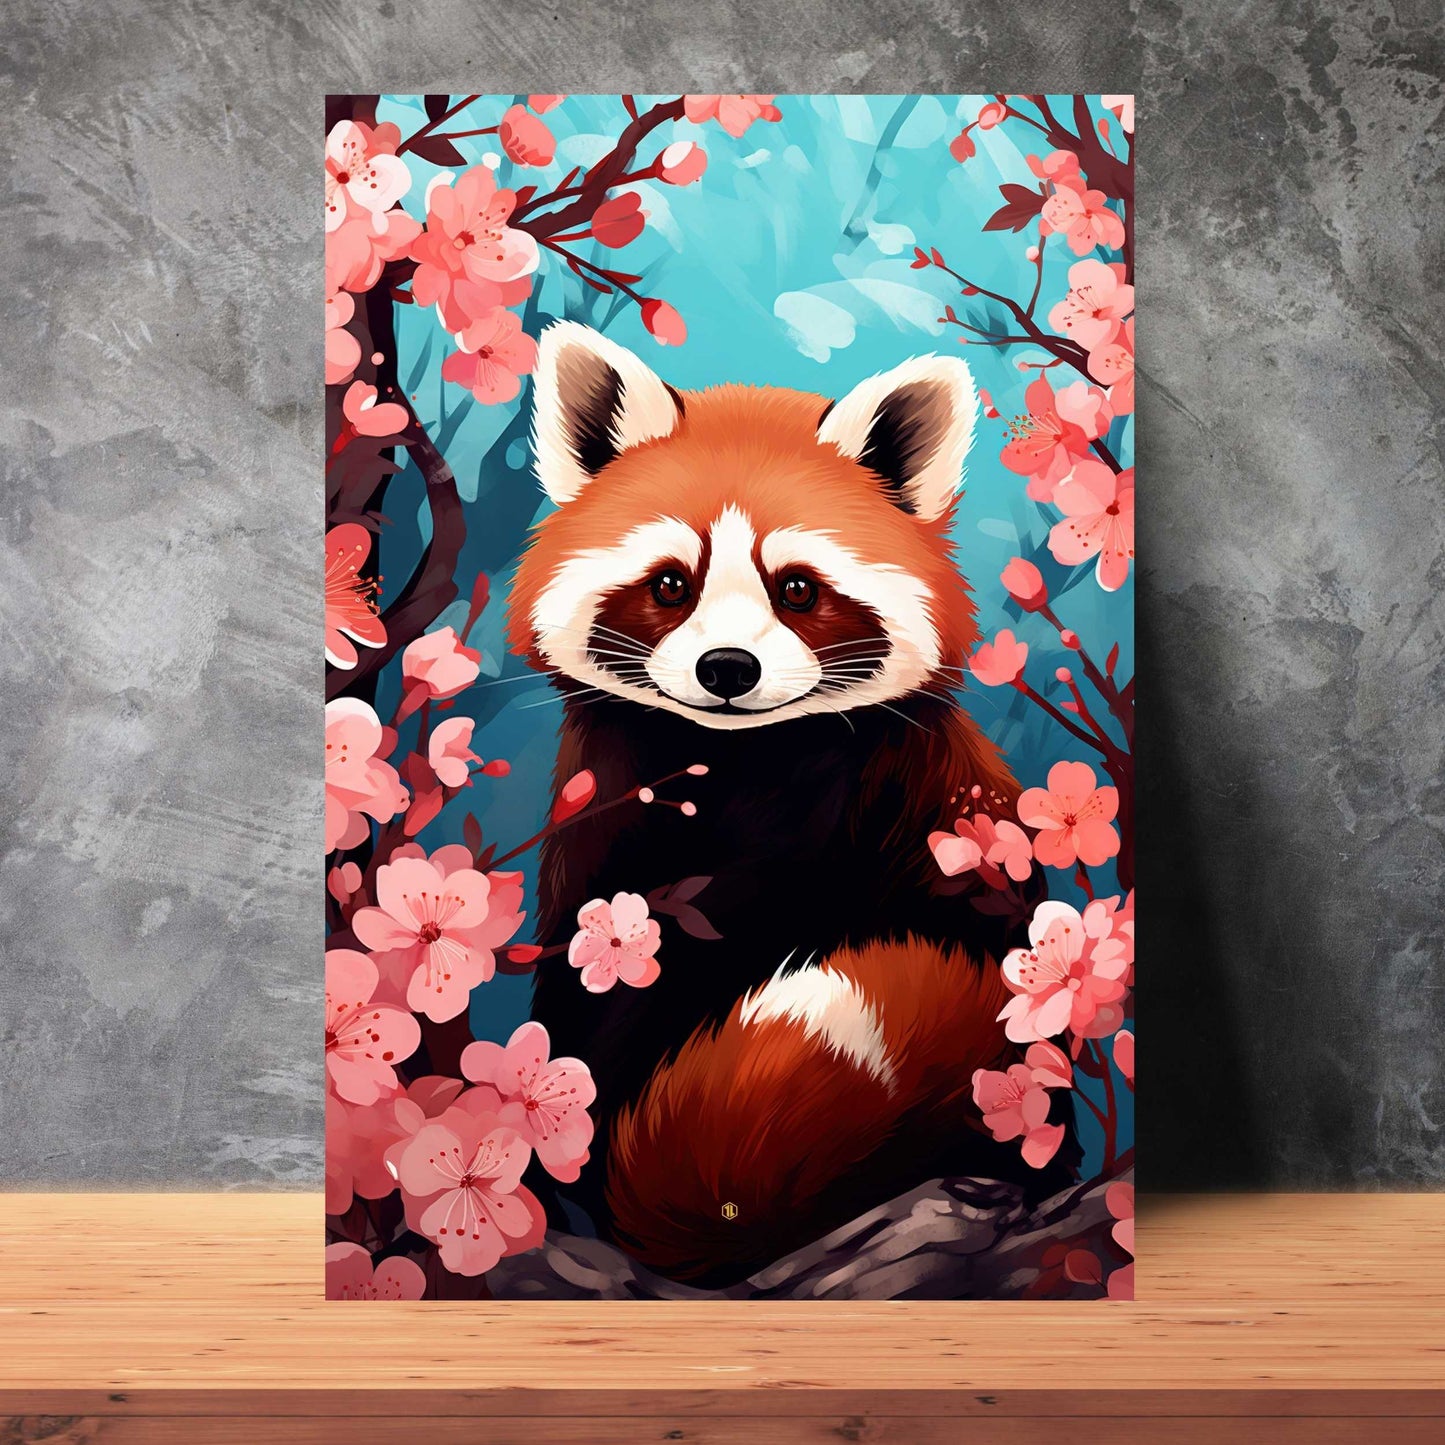 Red panda Poster | S01